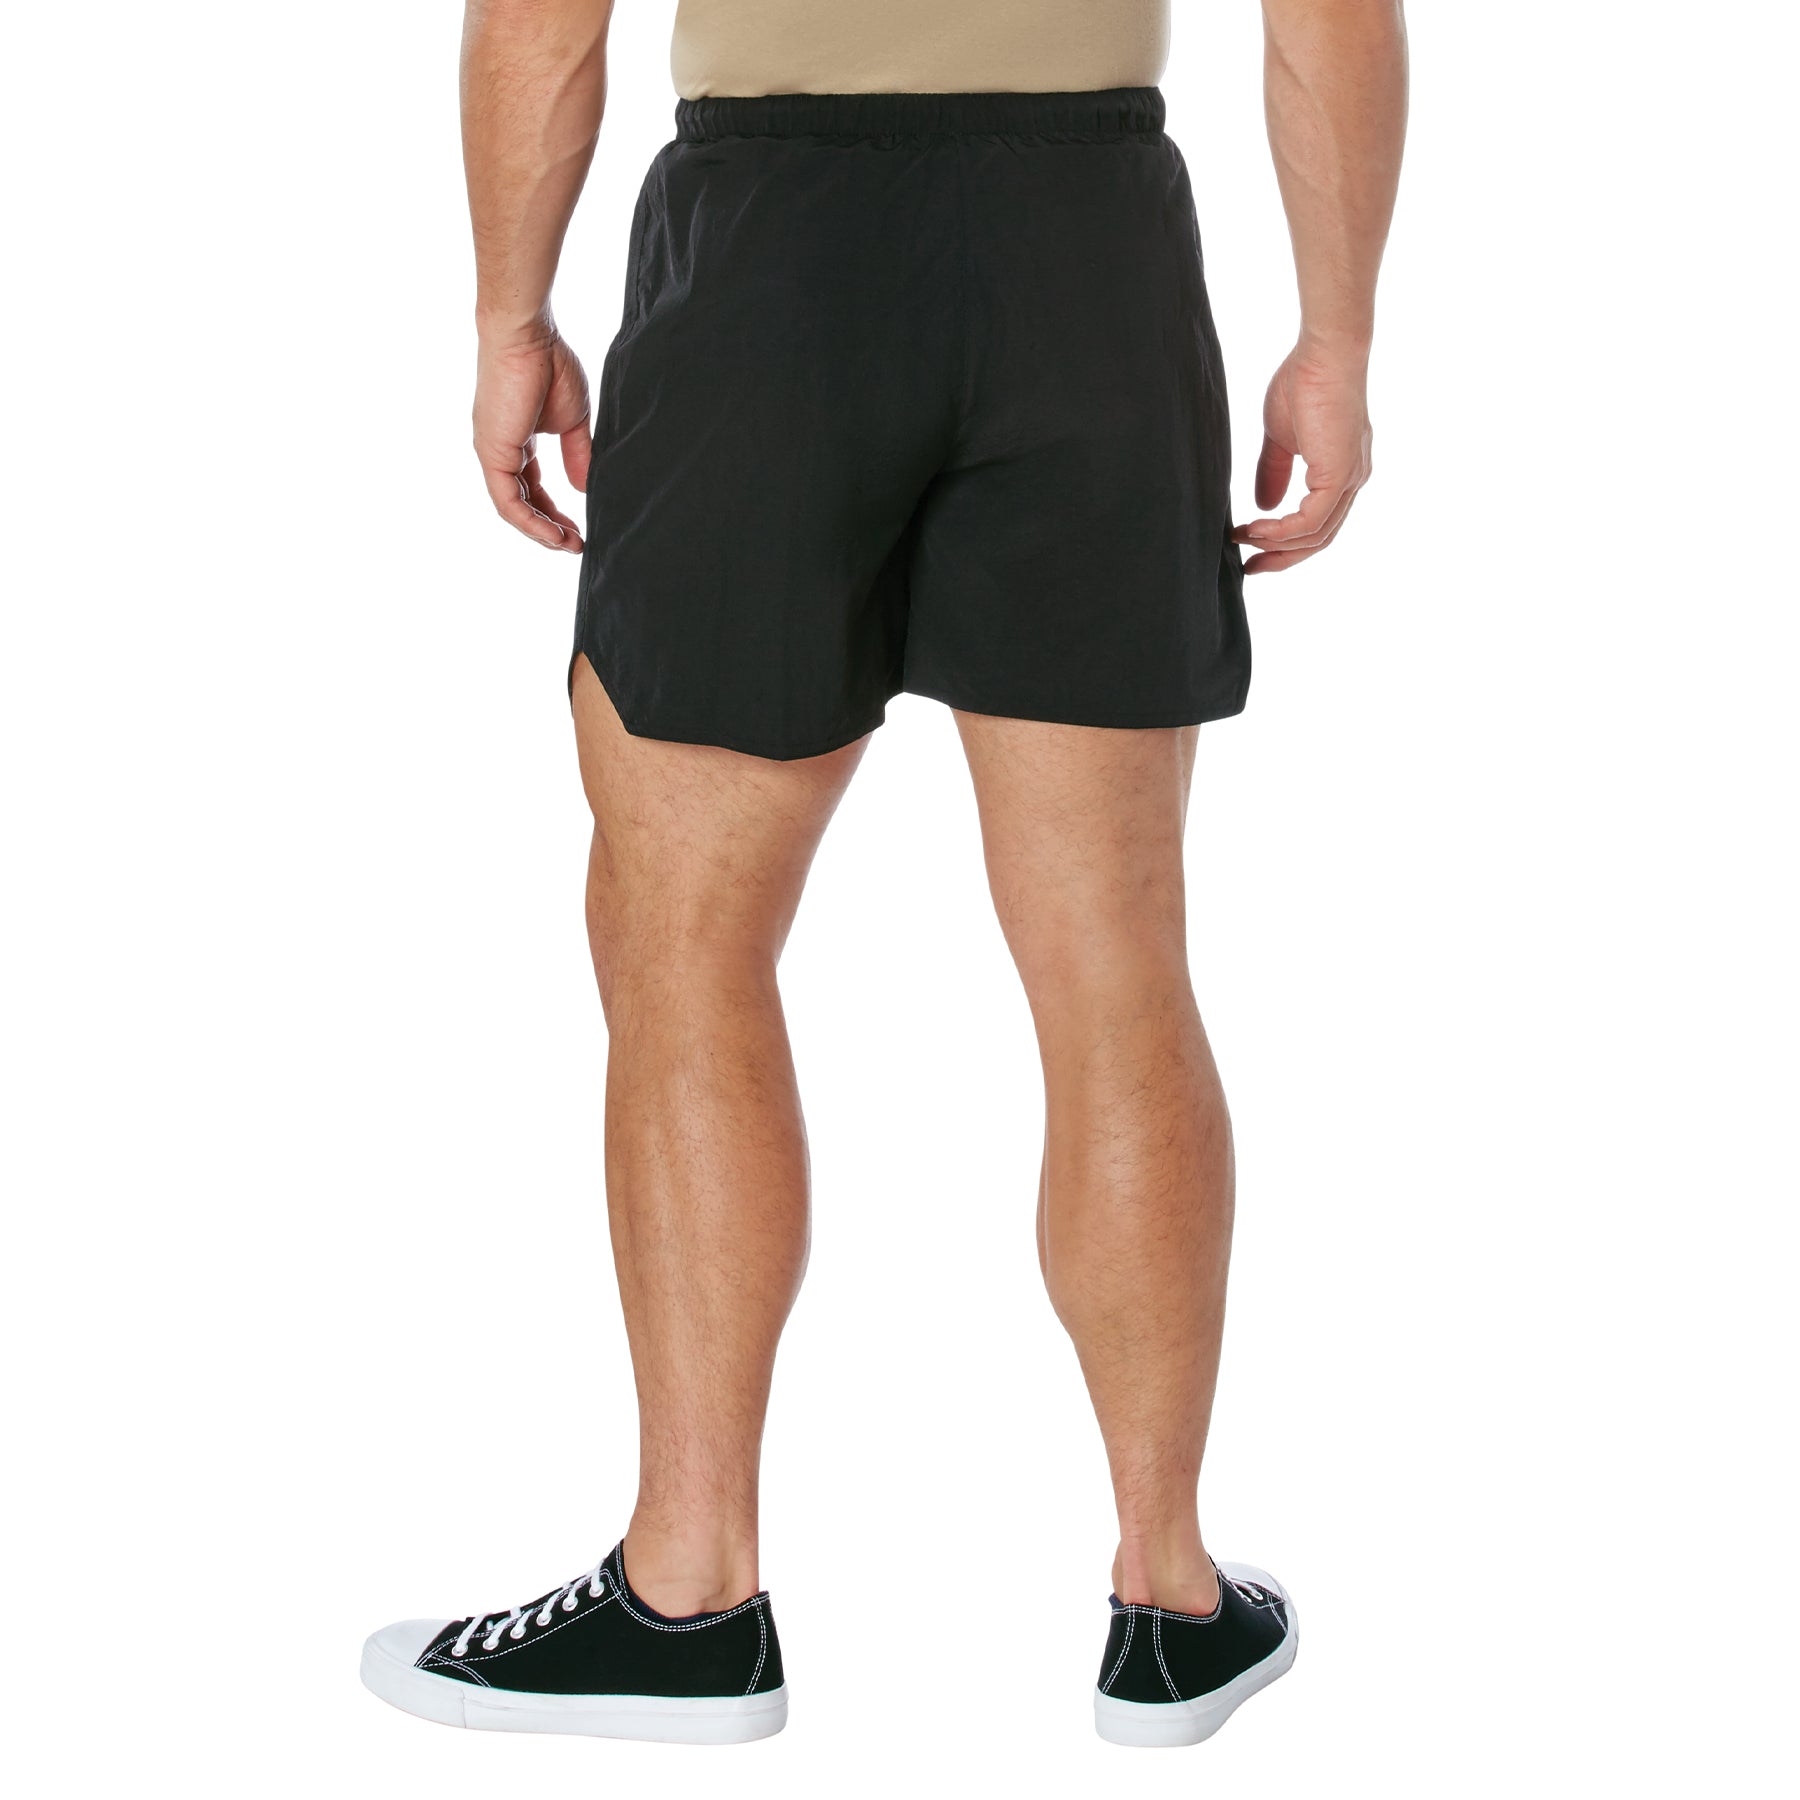 [Military] Nylon Army Physical Training Shorts